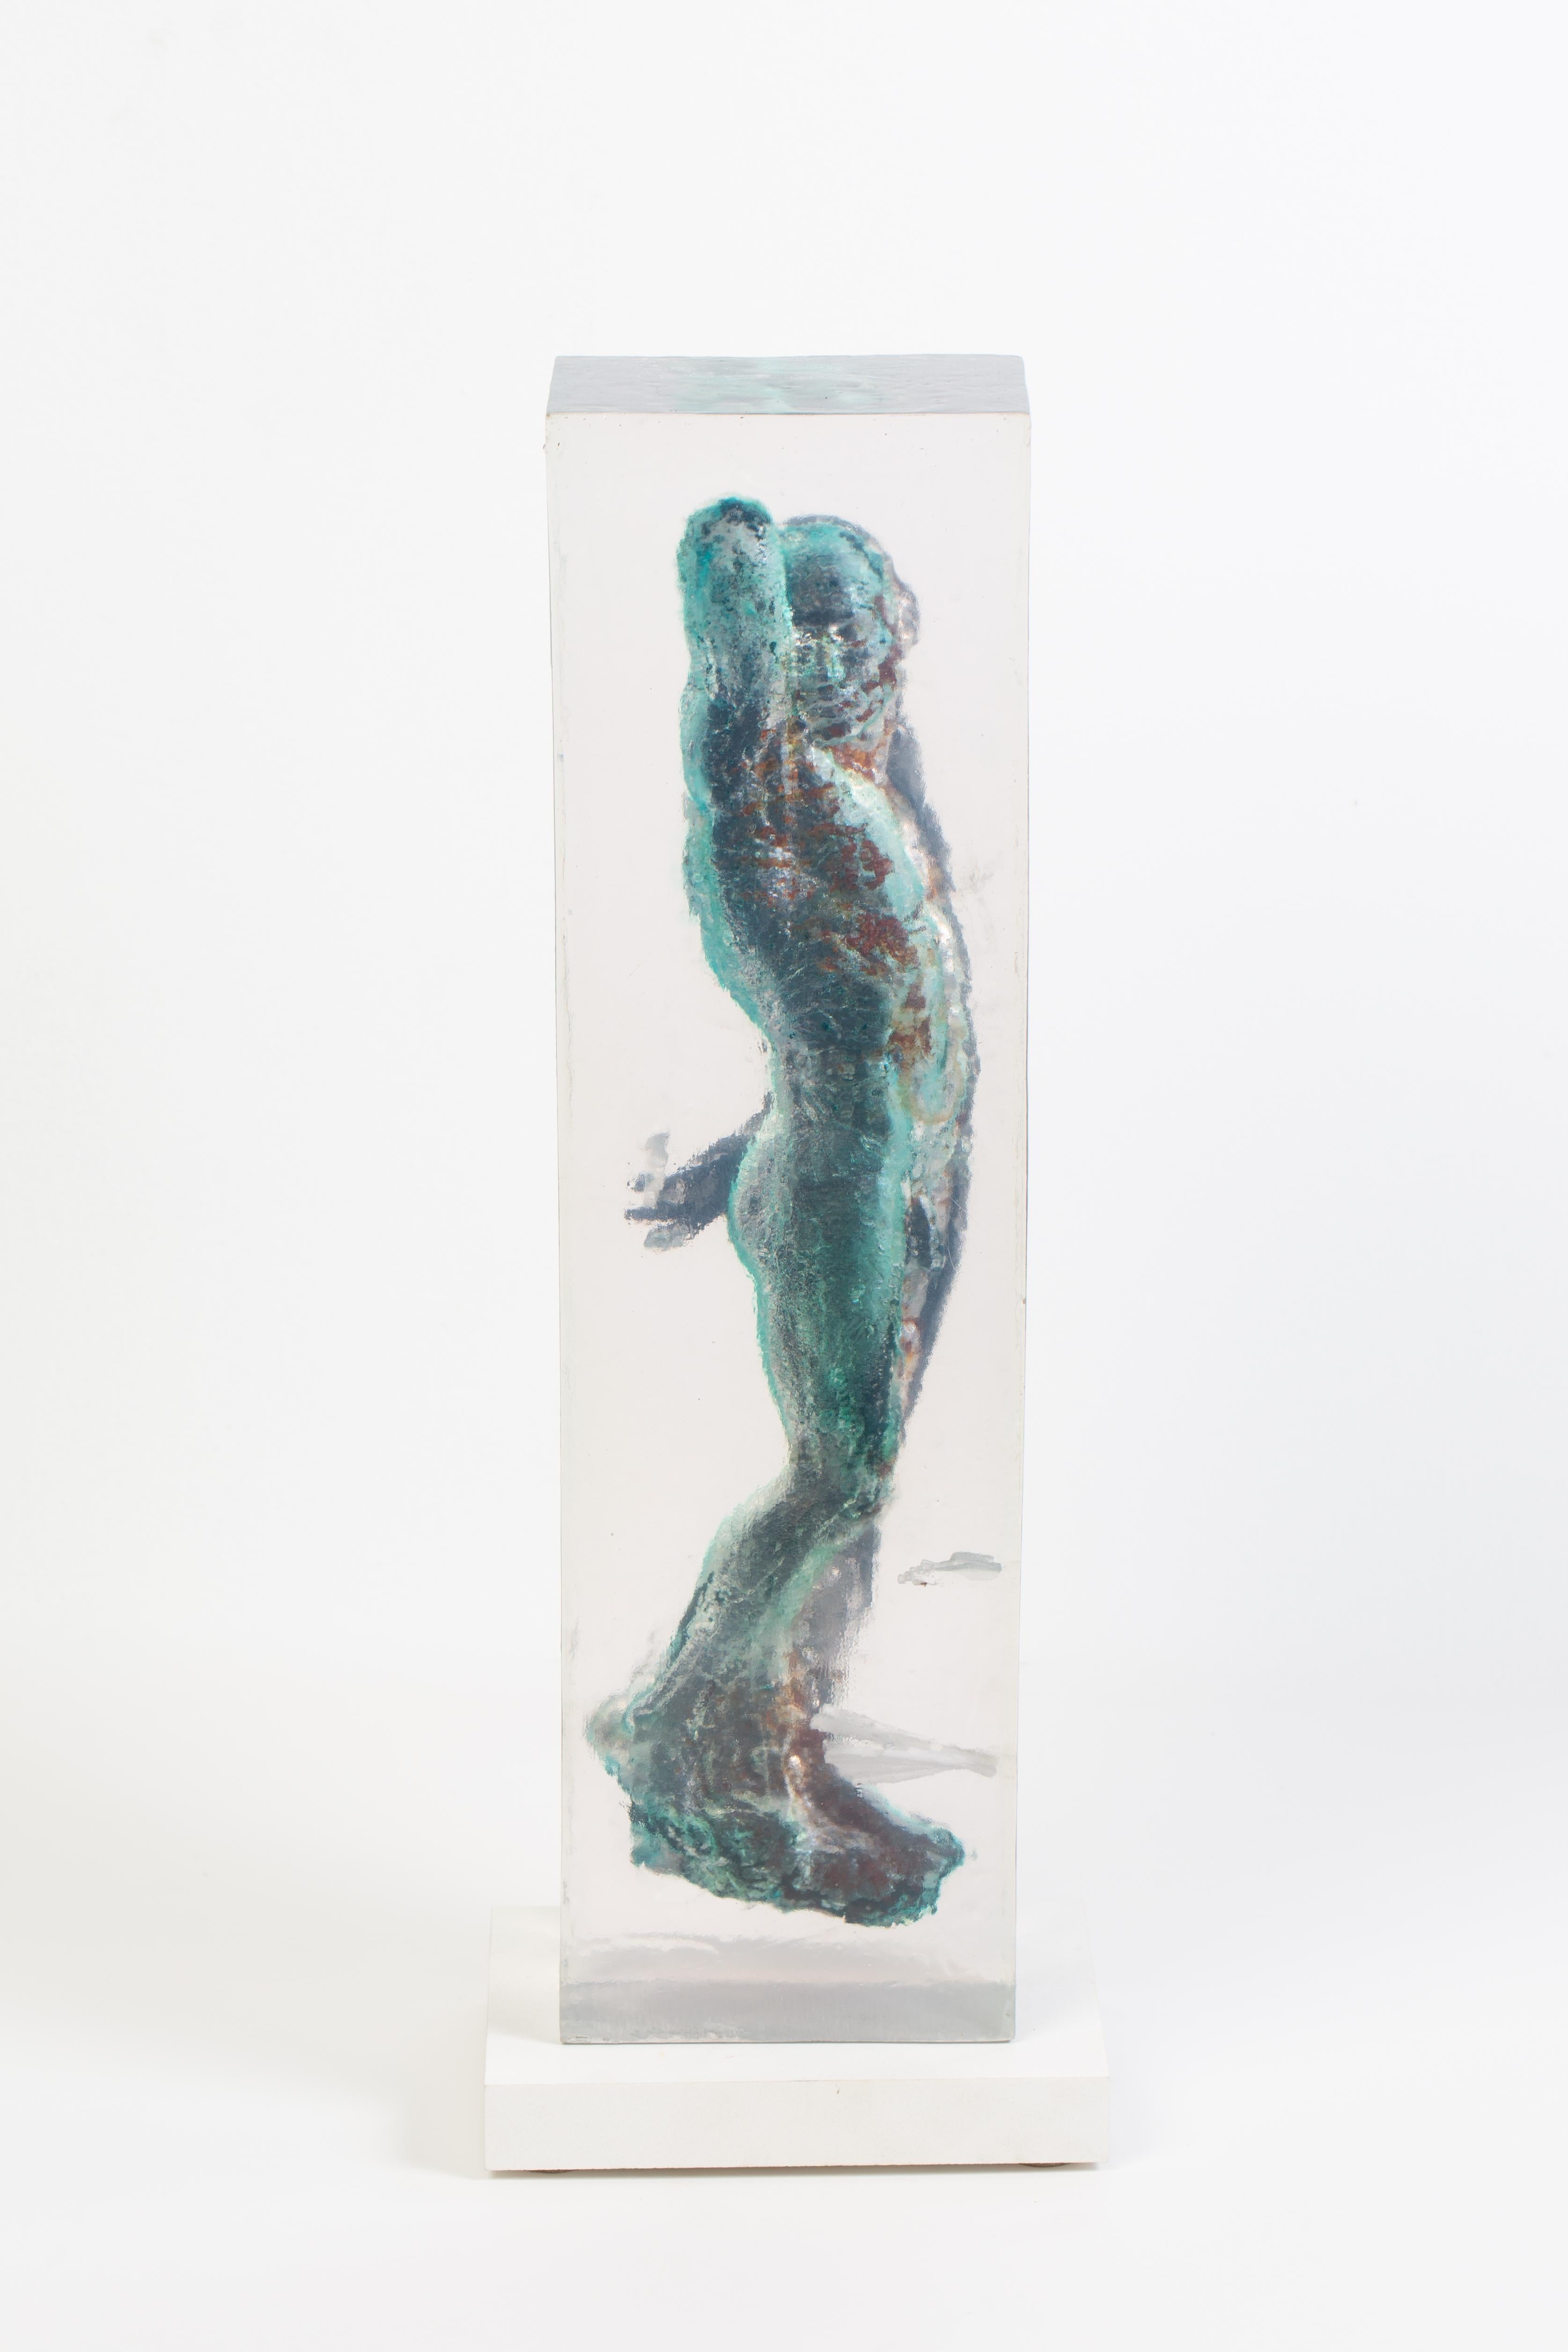 Embedded Slave - After Michelangelo, Sculpture Half Embedded in Clear Resin 11